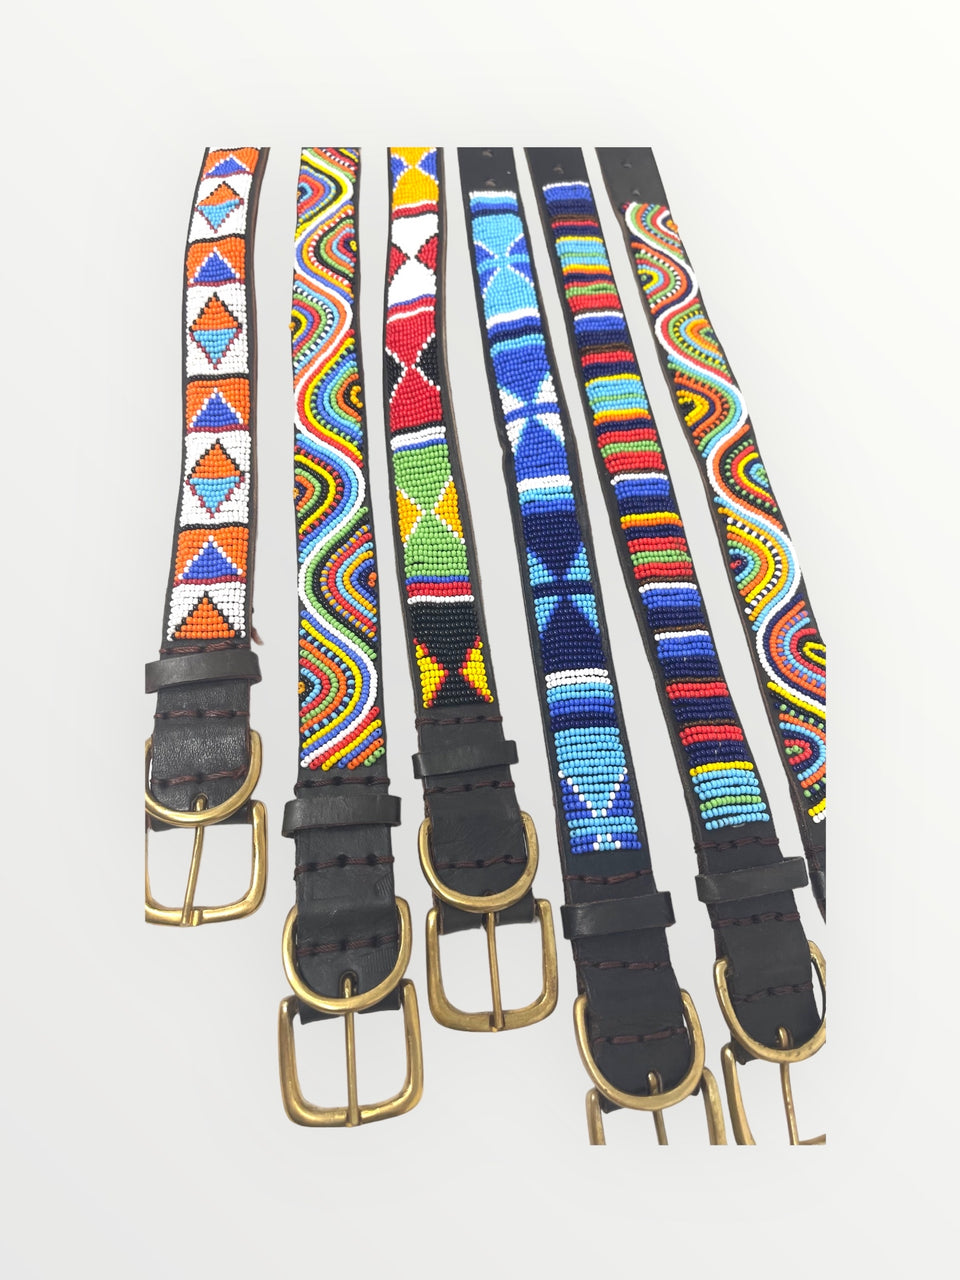 Maasai Leather Beaded Dog Collar